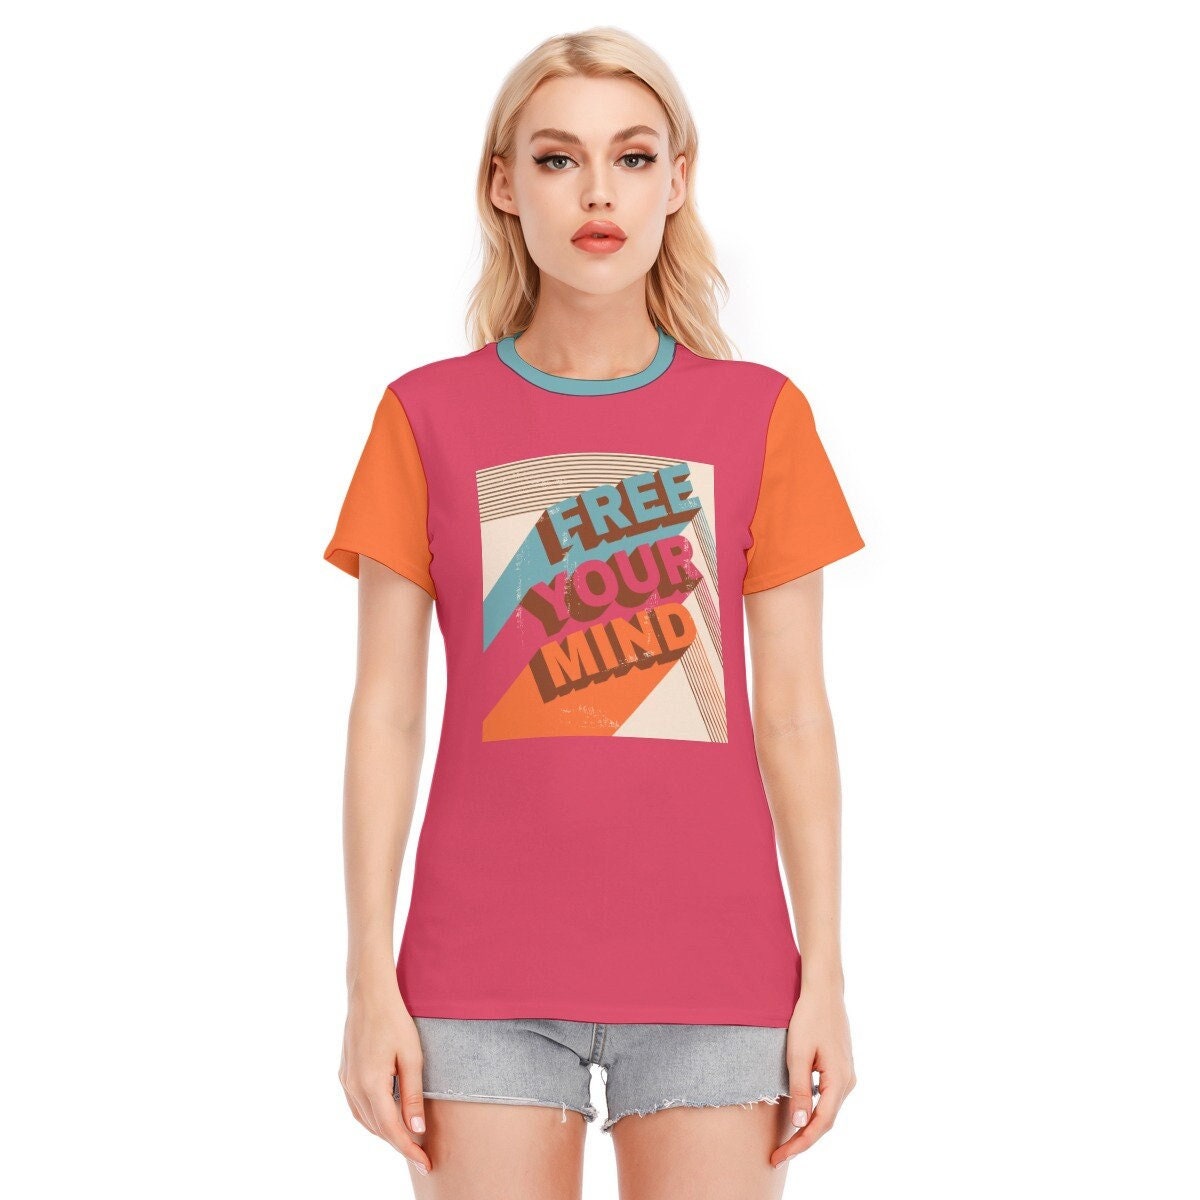 T-shirt rétro, T-shirts mots, T-shirt mots vintage, T-shirt mots roses, Tshirt hippie femmes, T-shirt style vintage, T-shirt rose fuchsia